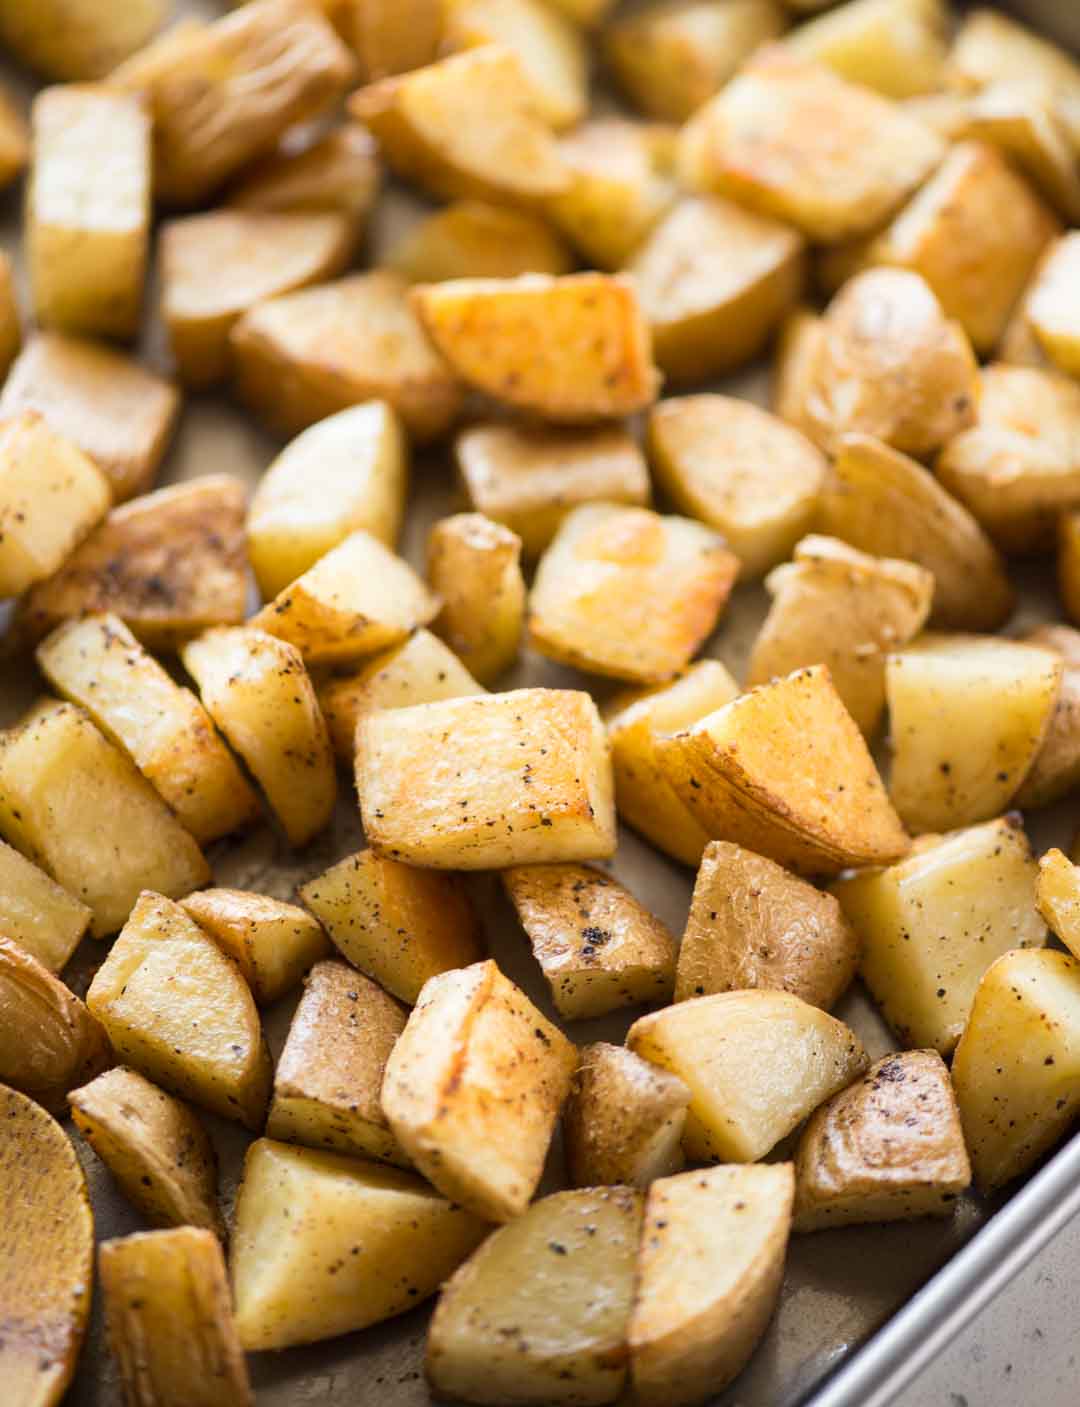 Season well and roast potatoes until crispy for the Salad.